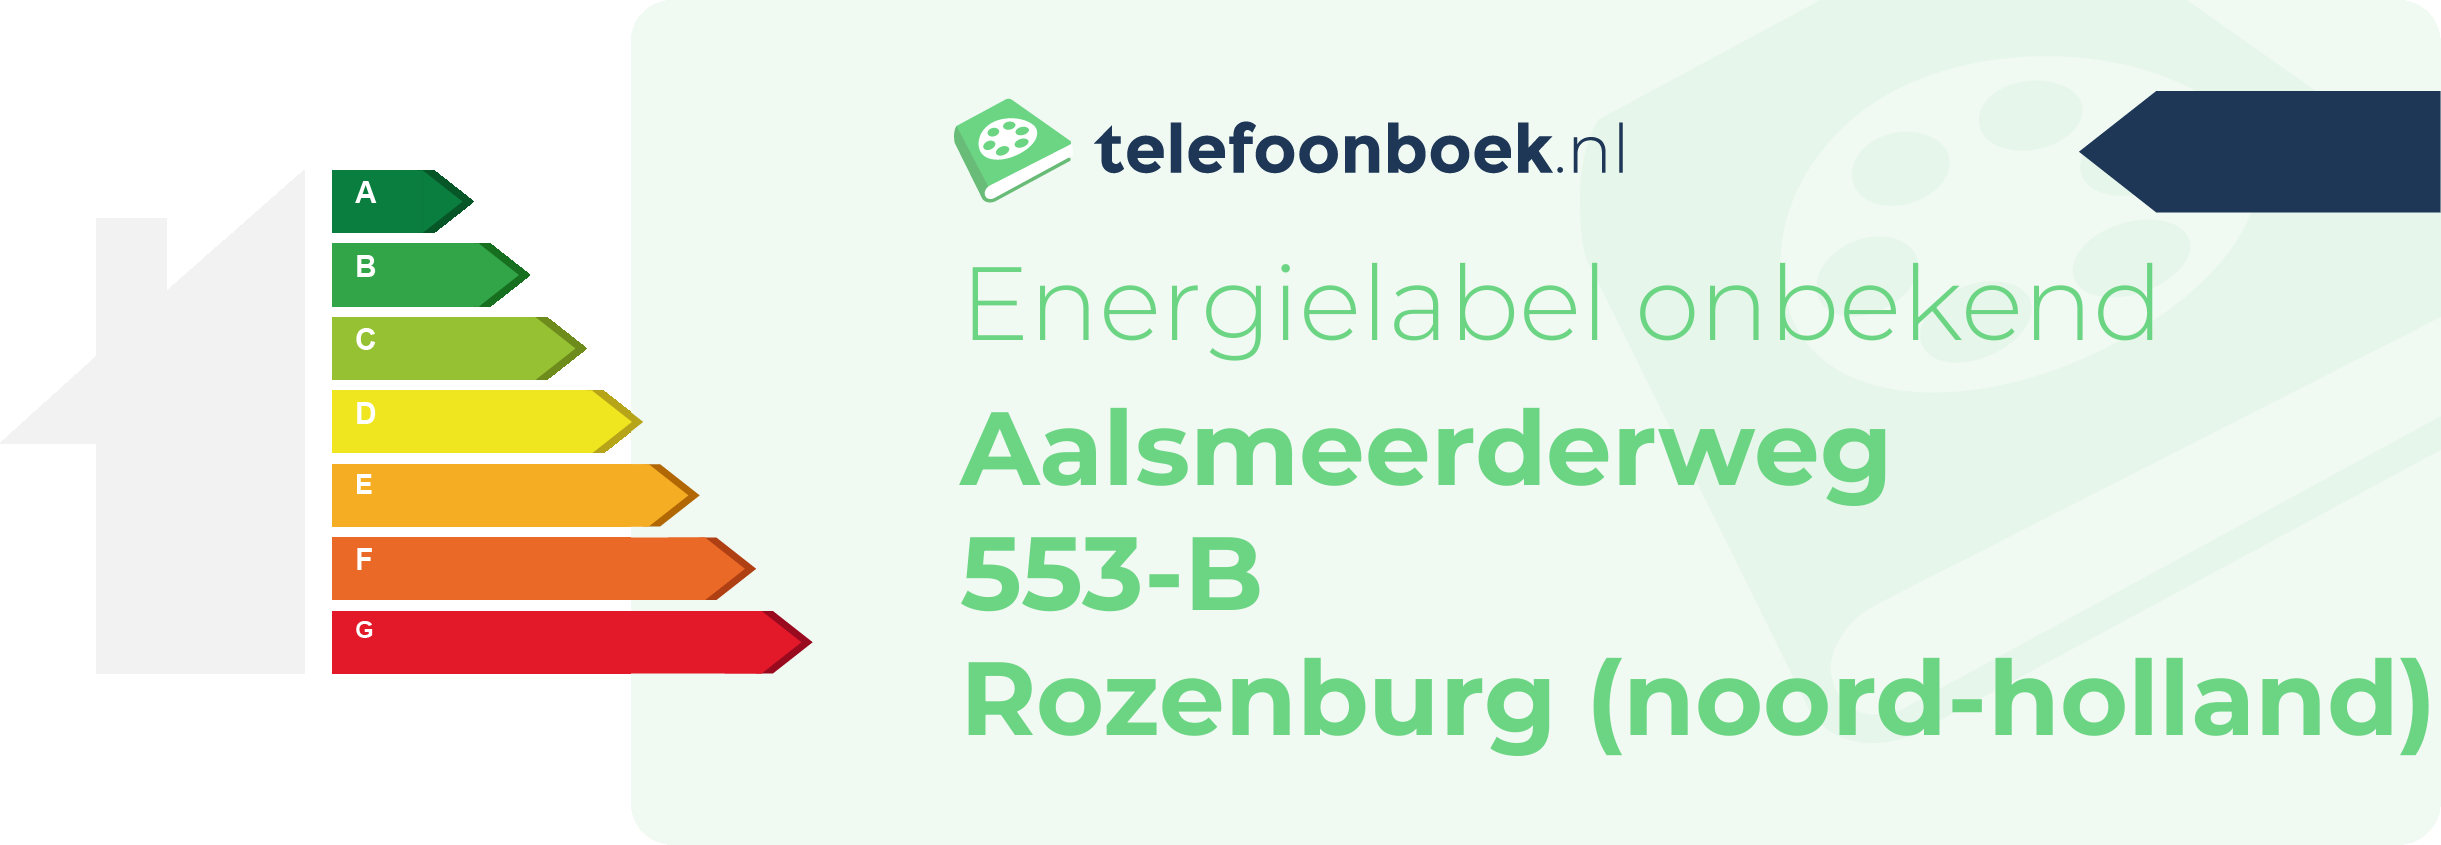 Energielabel Aalsmeerderweg 553-B Rozenburg (Noord-Holland)